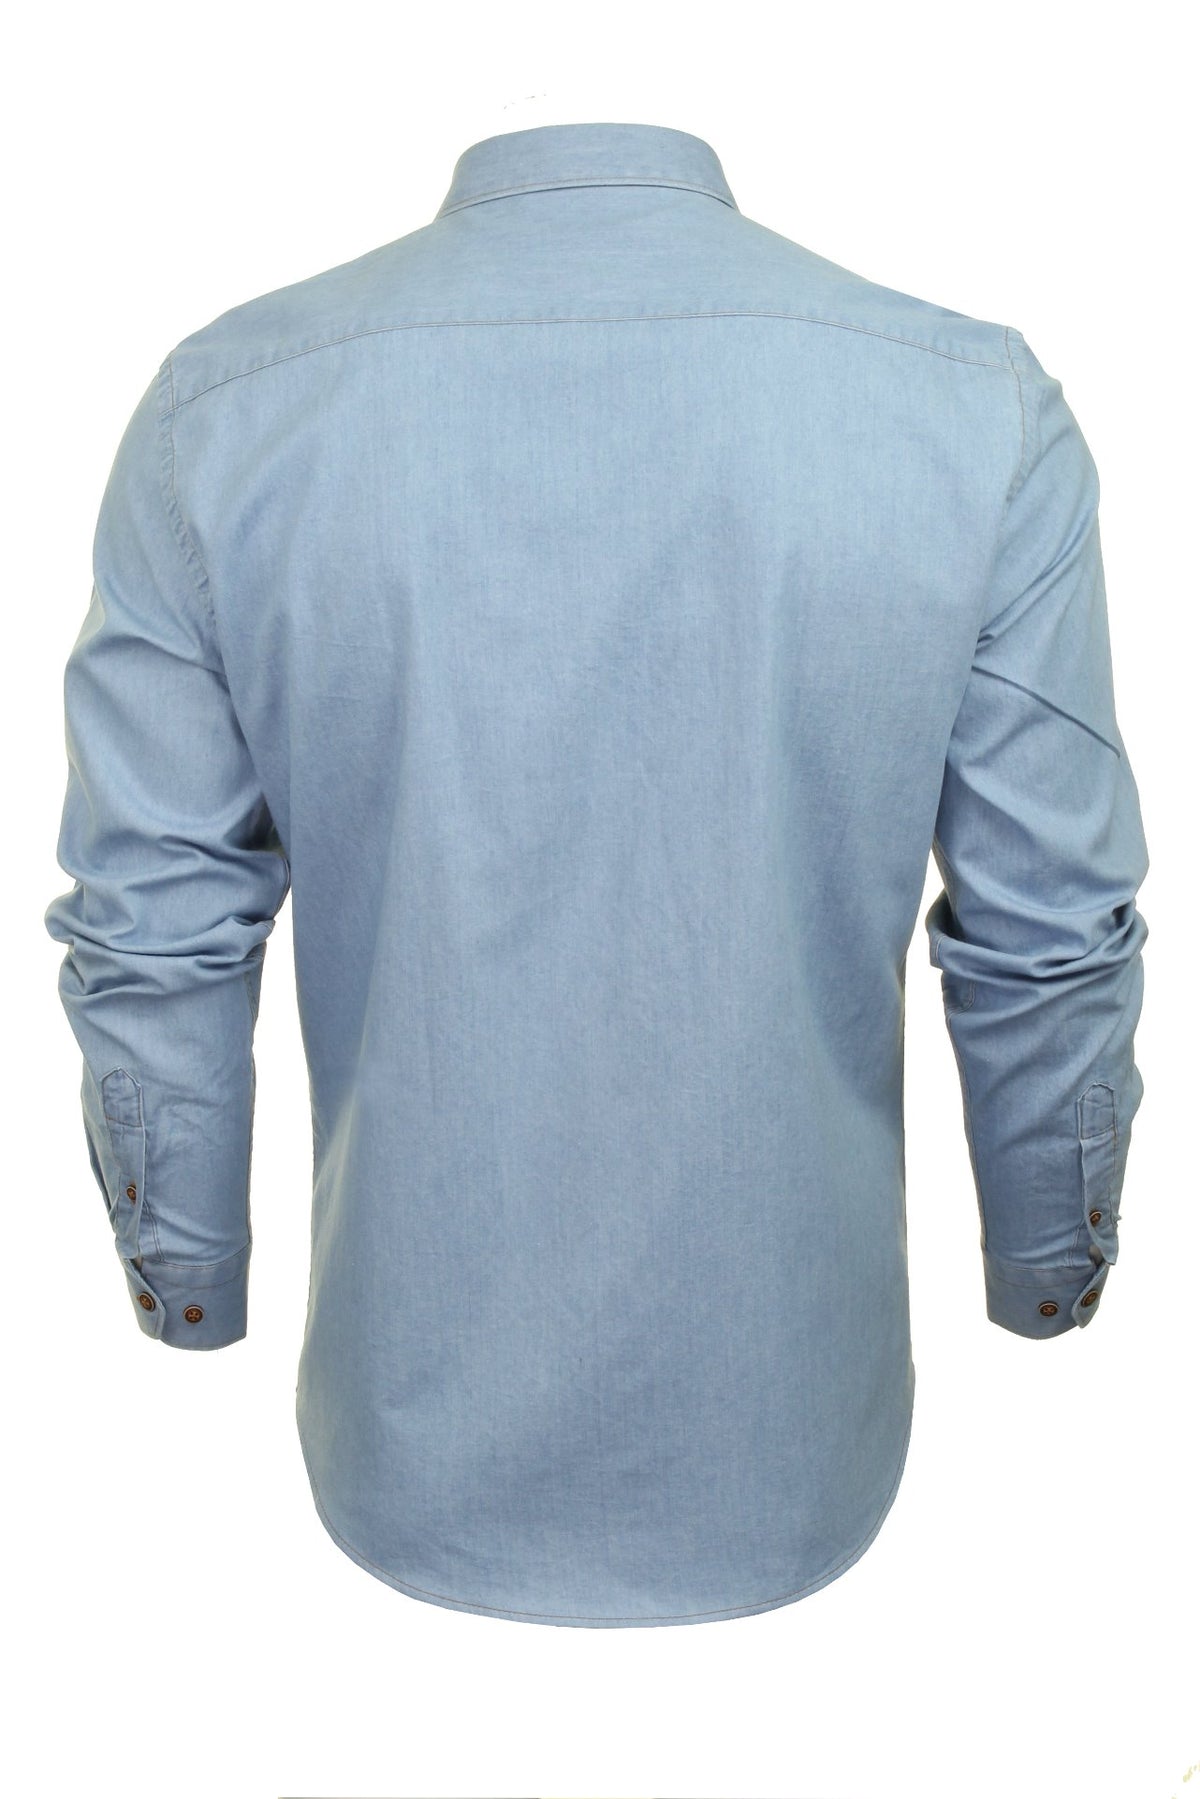 Xact Mens Long Sleeved Denim Shirt - Slim Fit, 03, Xsh1074, Blue